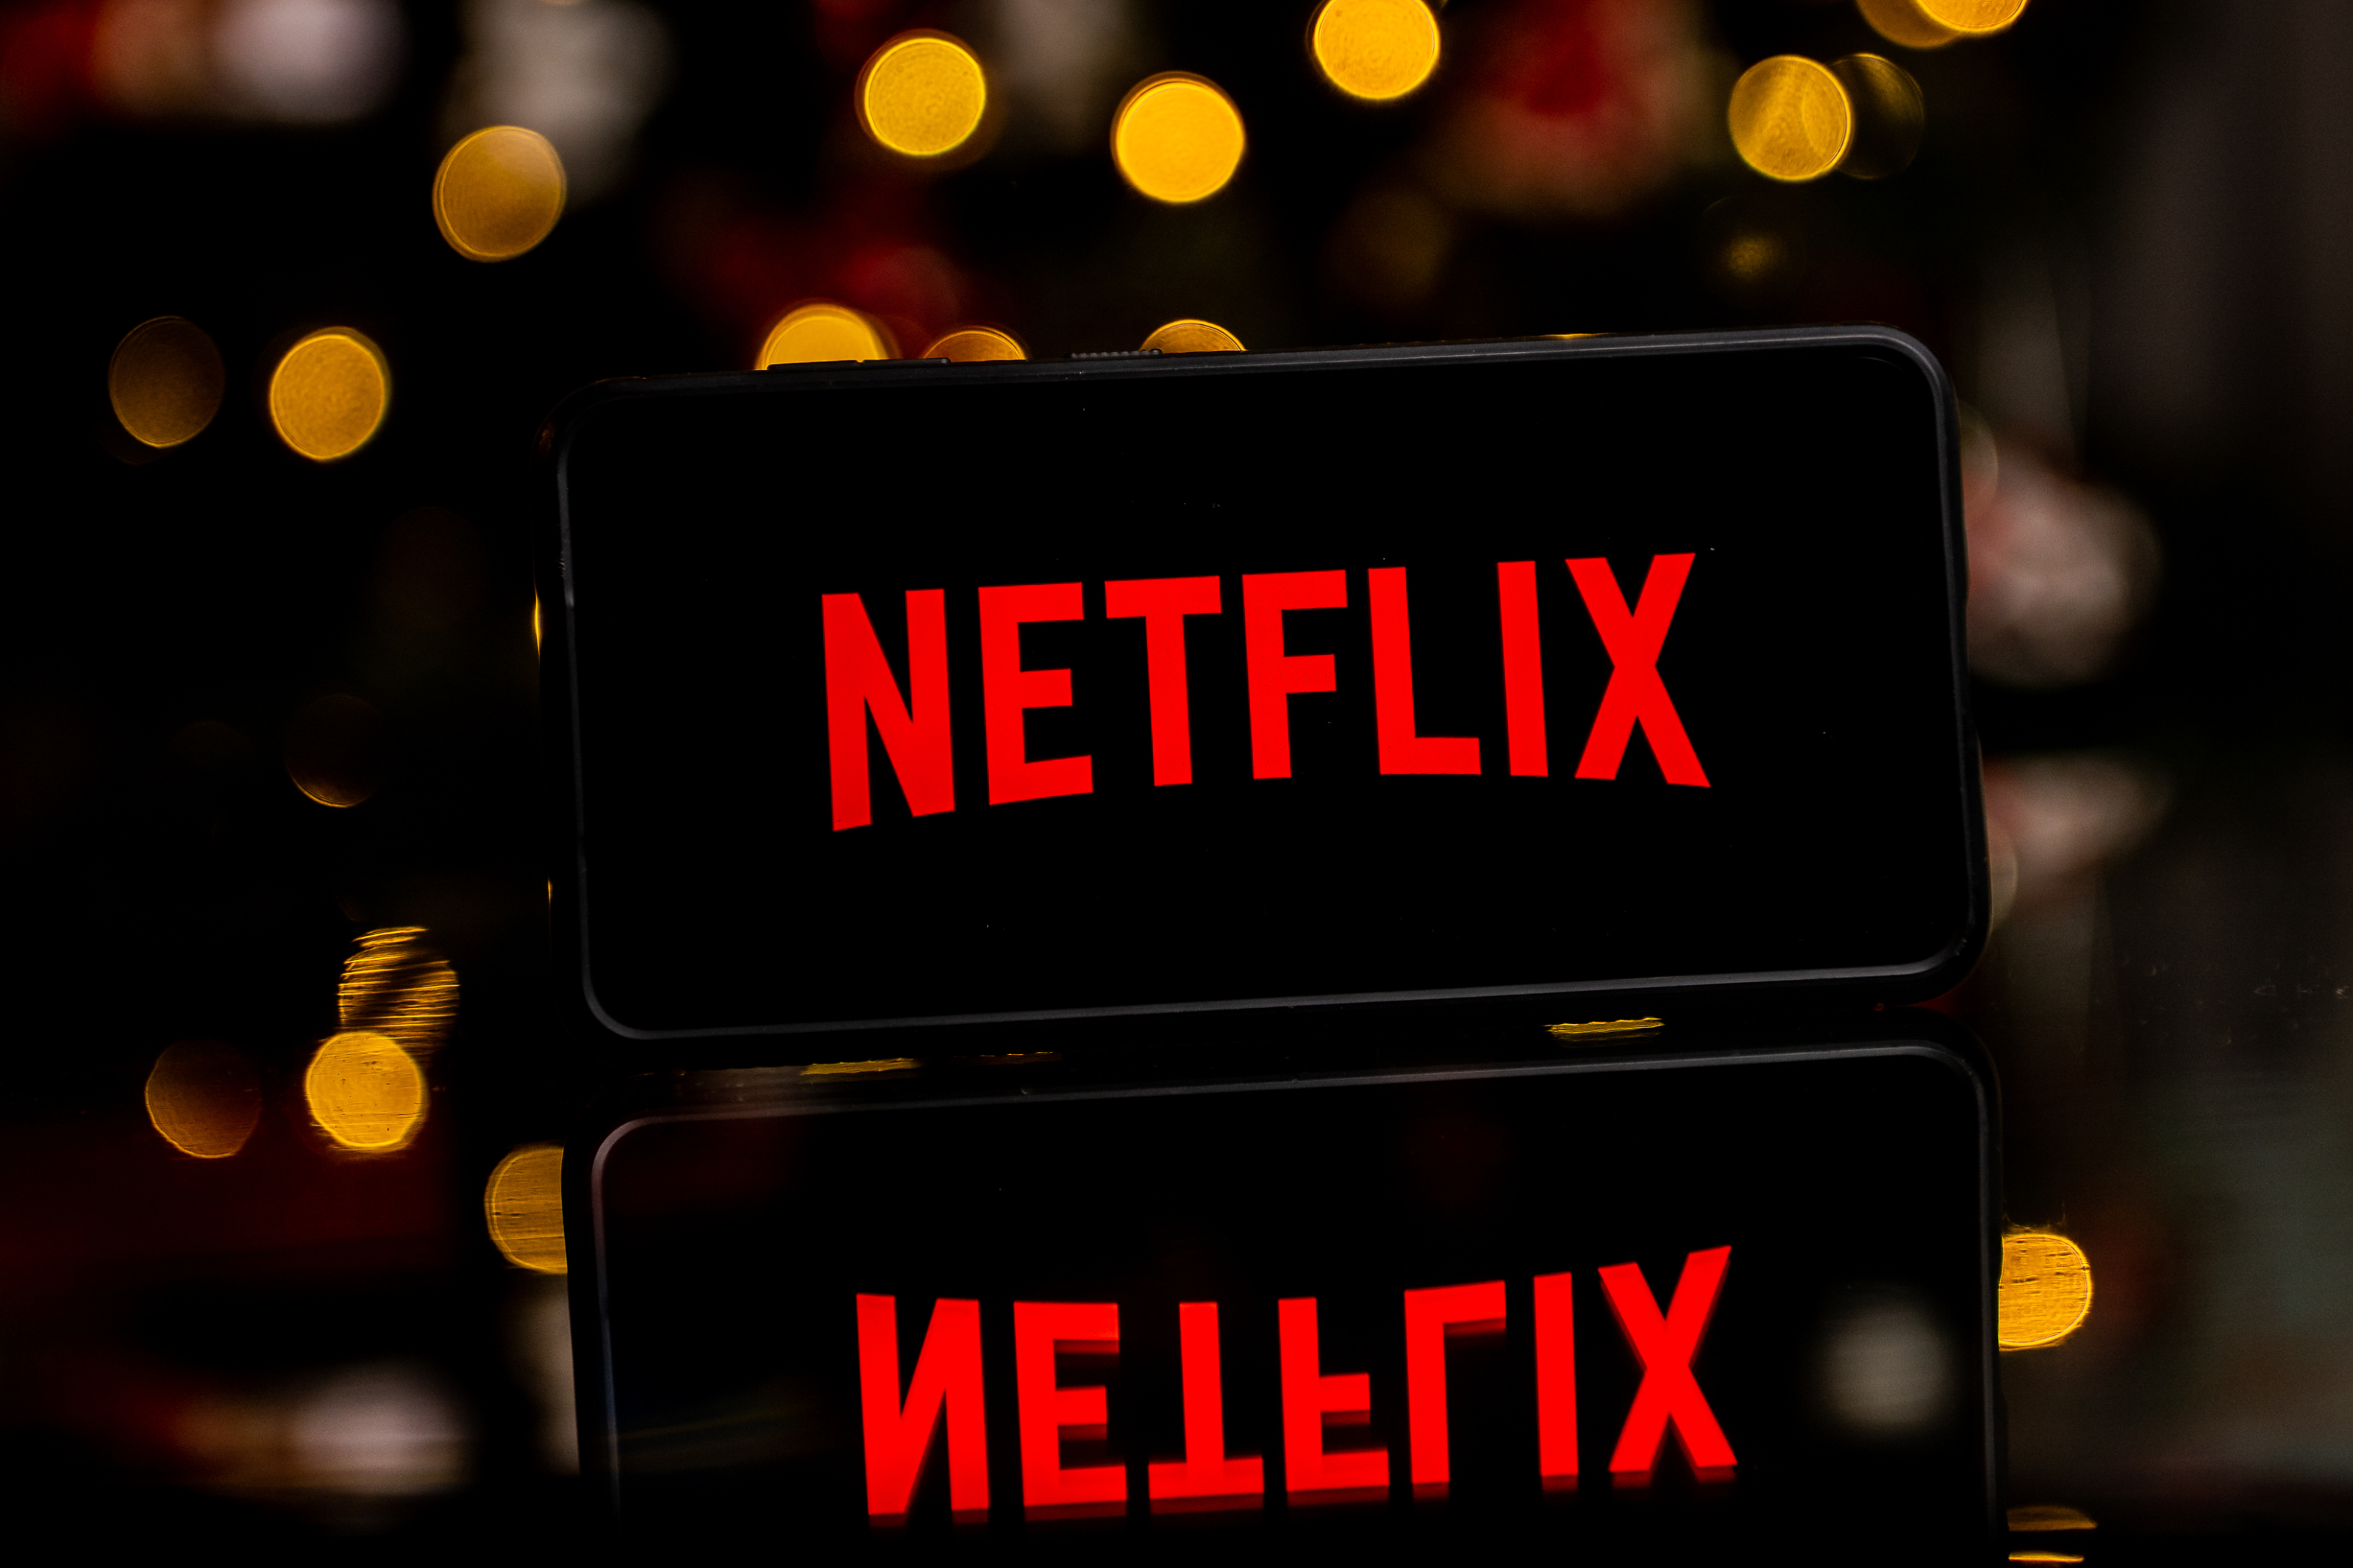 Inside Job Creator Shion Takeuchi Confirms Netflix Canceled Season 2